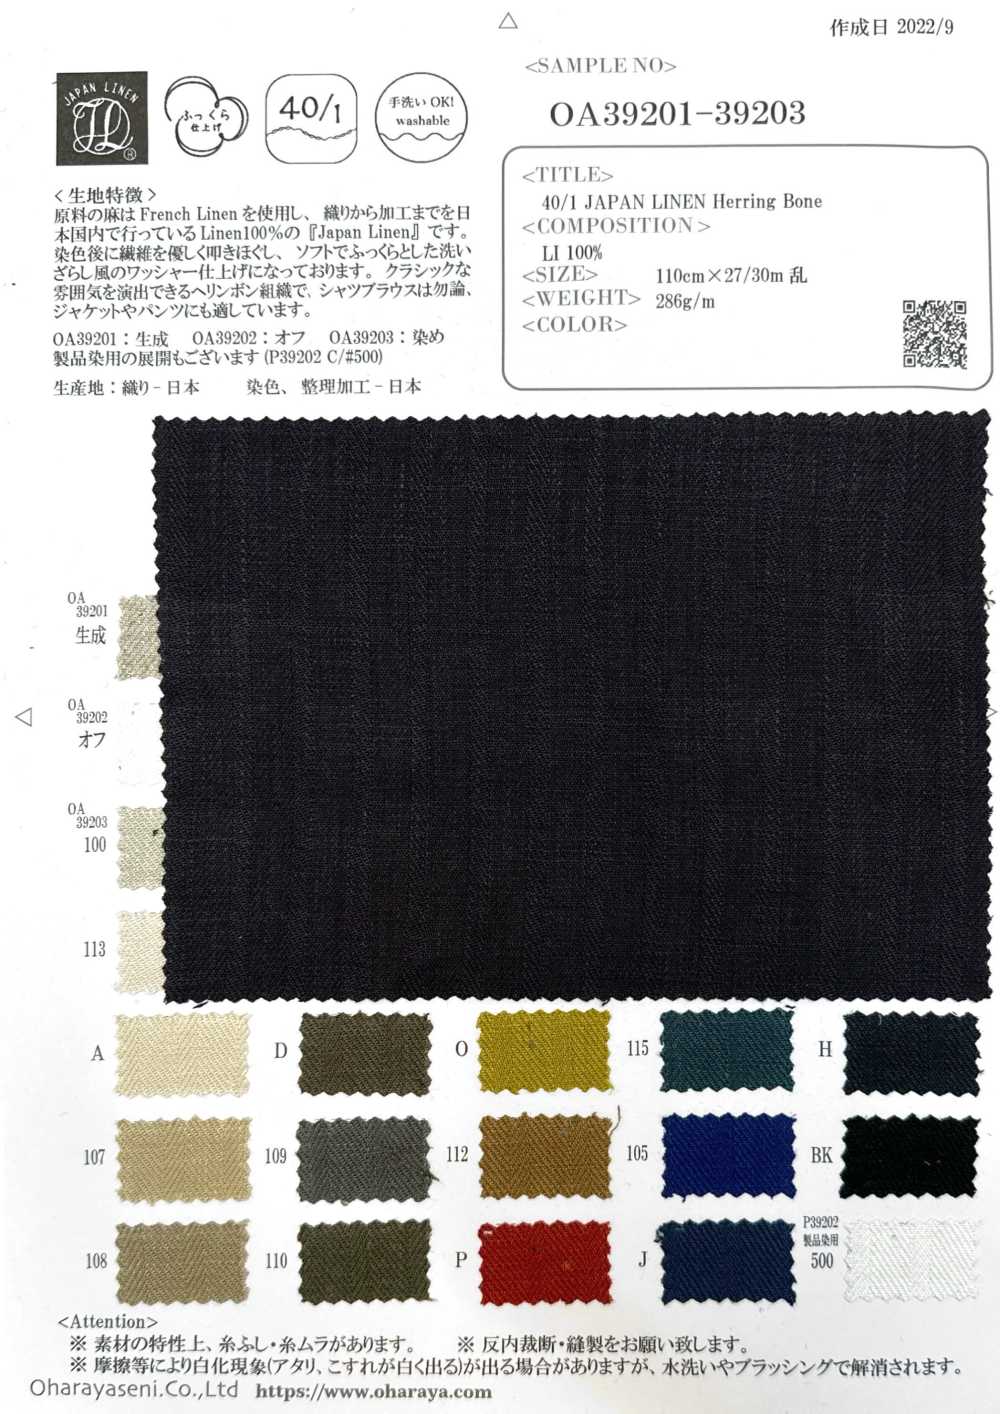 OA39201 40/1 JAPAN LINEN Herring Bone[Textile / Fabric] Oharayaseni